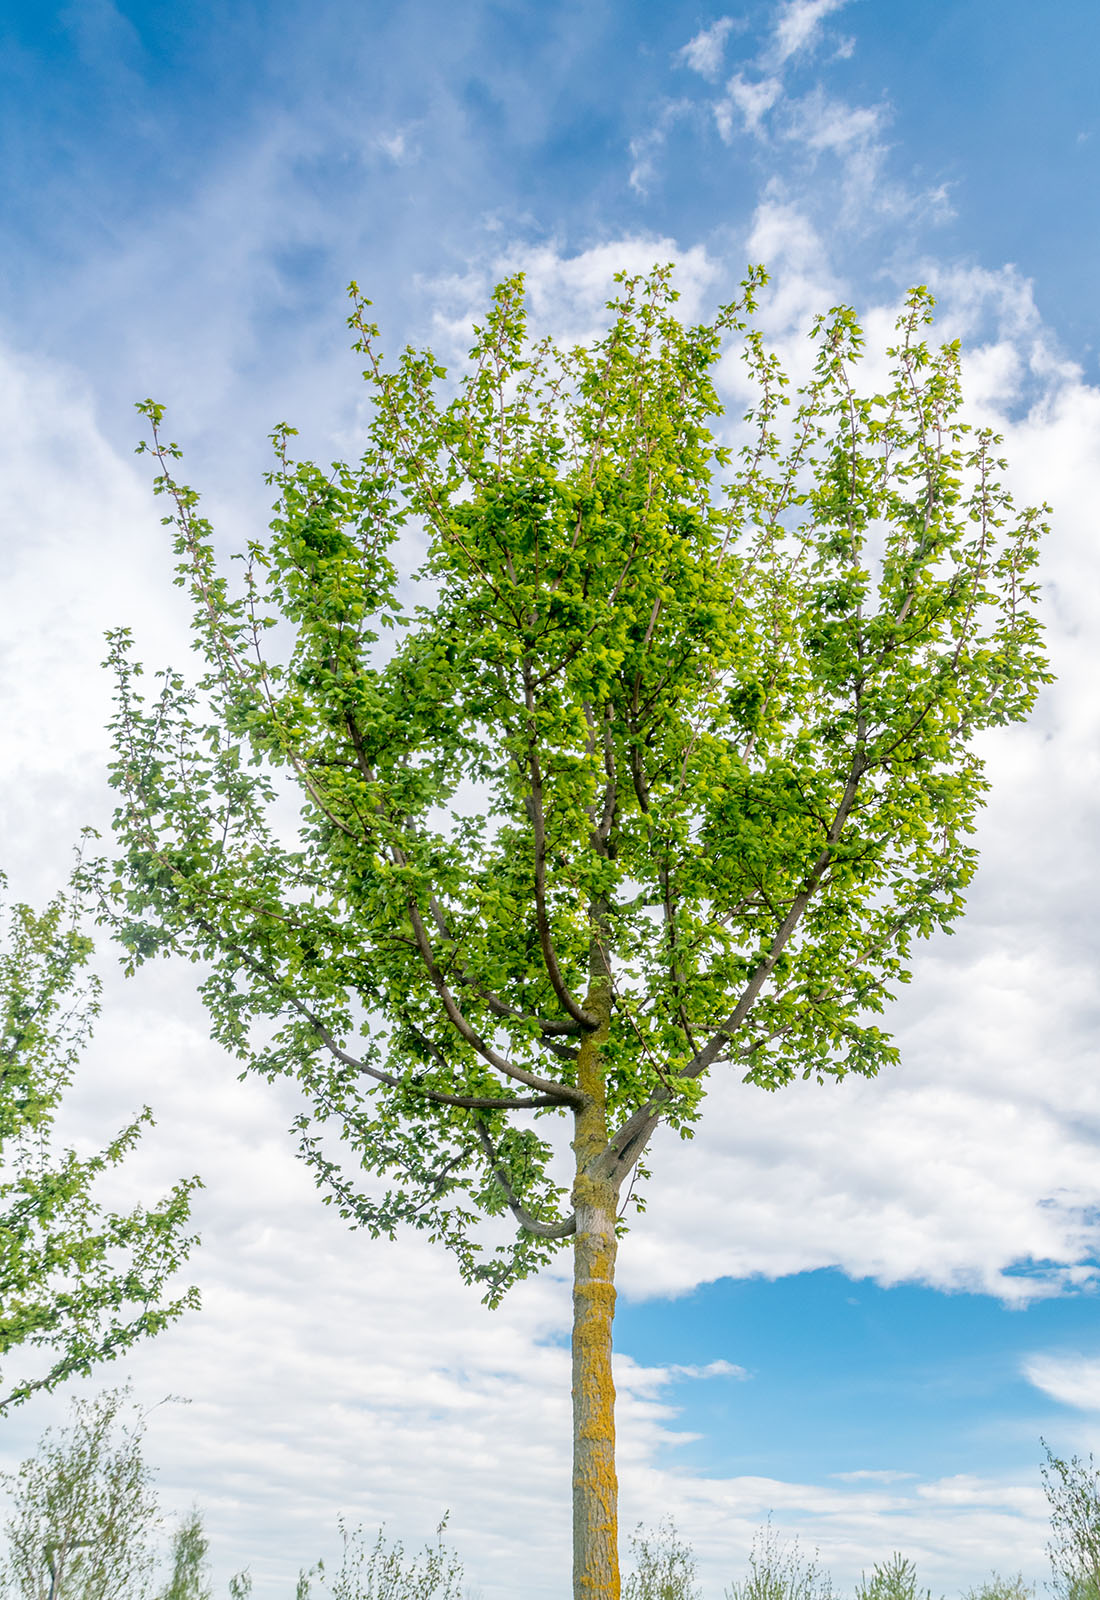 Acer campestre "Elsrijk" - Klon polny